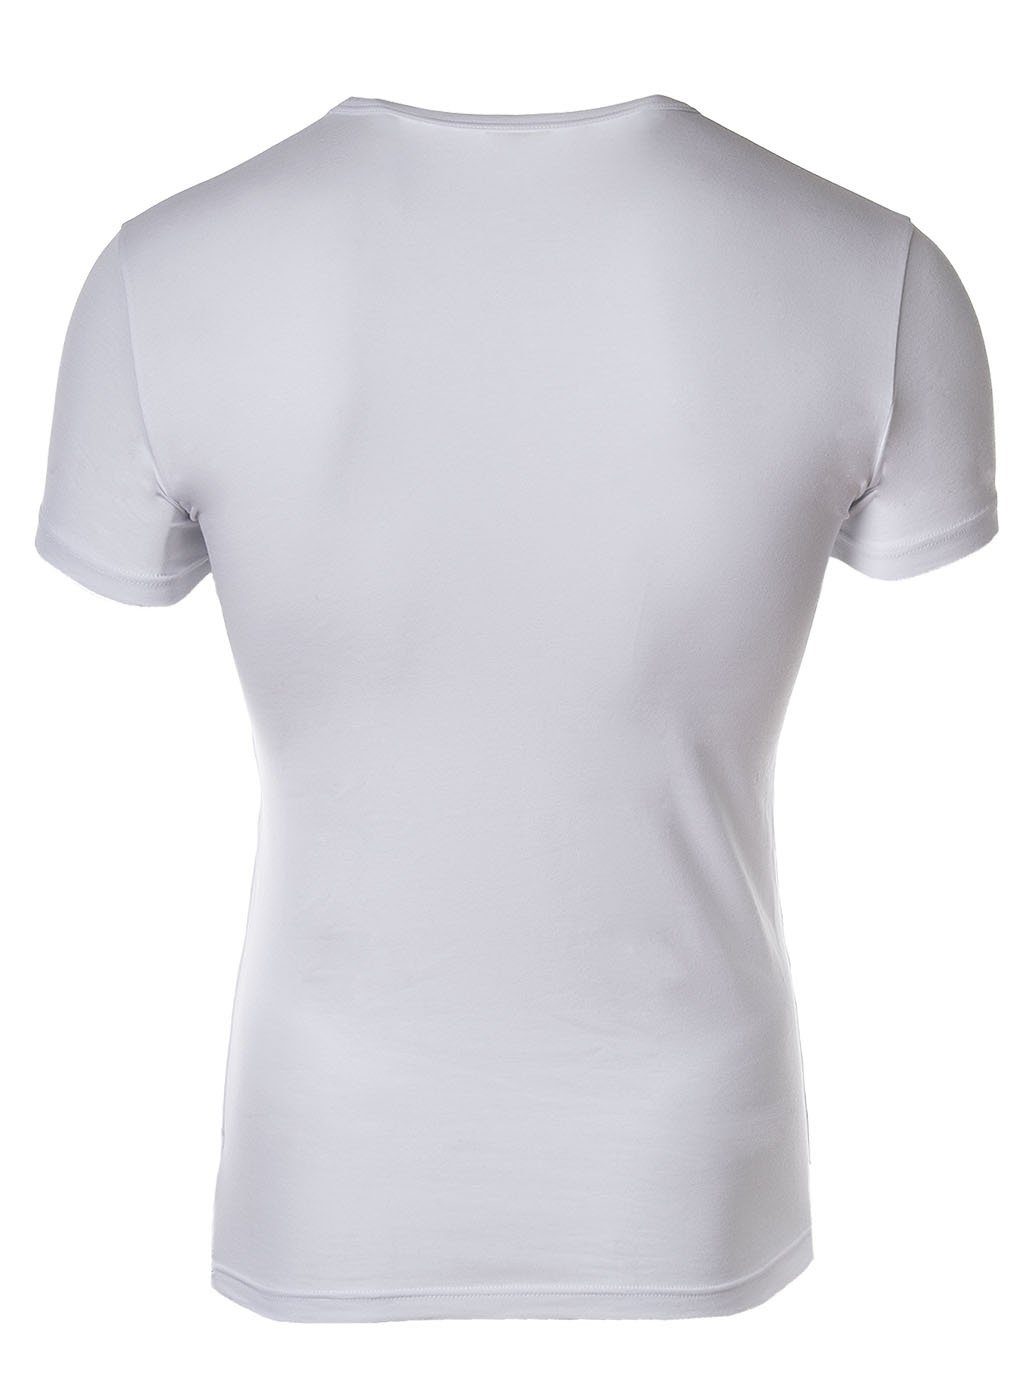 Emporio V-Neck, 2er Pack weiß/marine V-Ausschnitt Armani Herren T-Shirt - T-Shirt